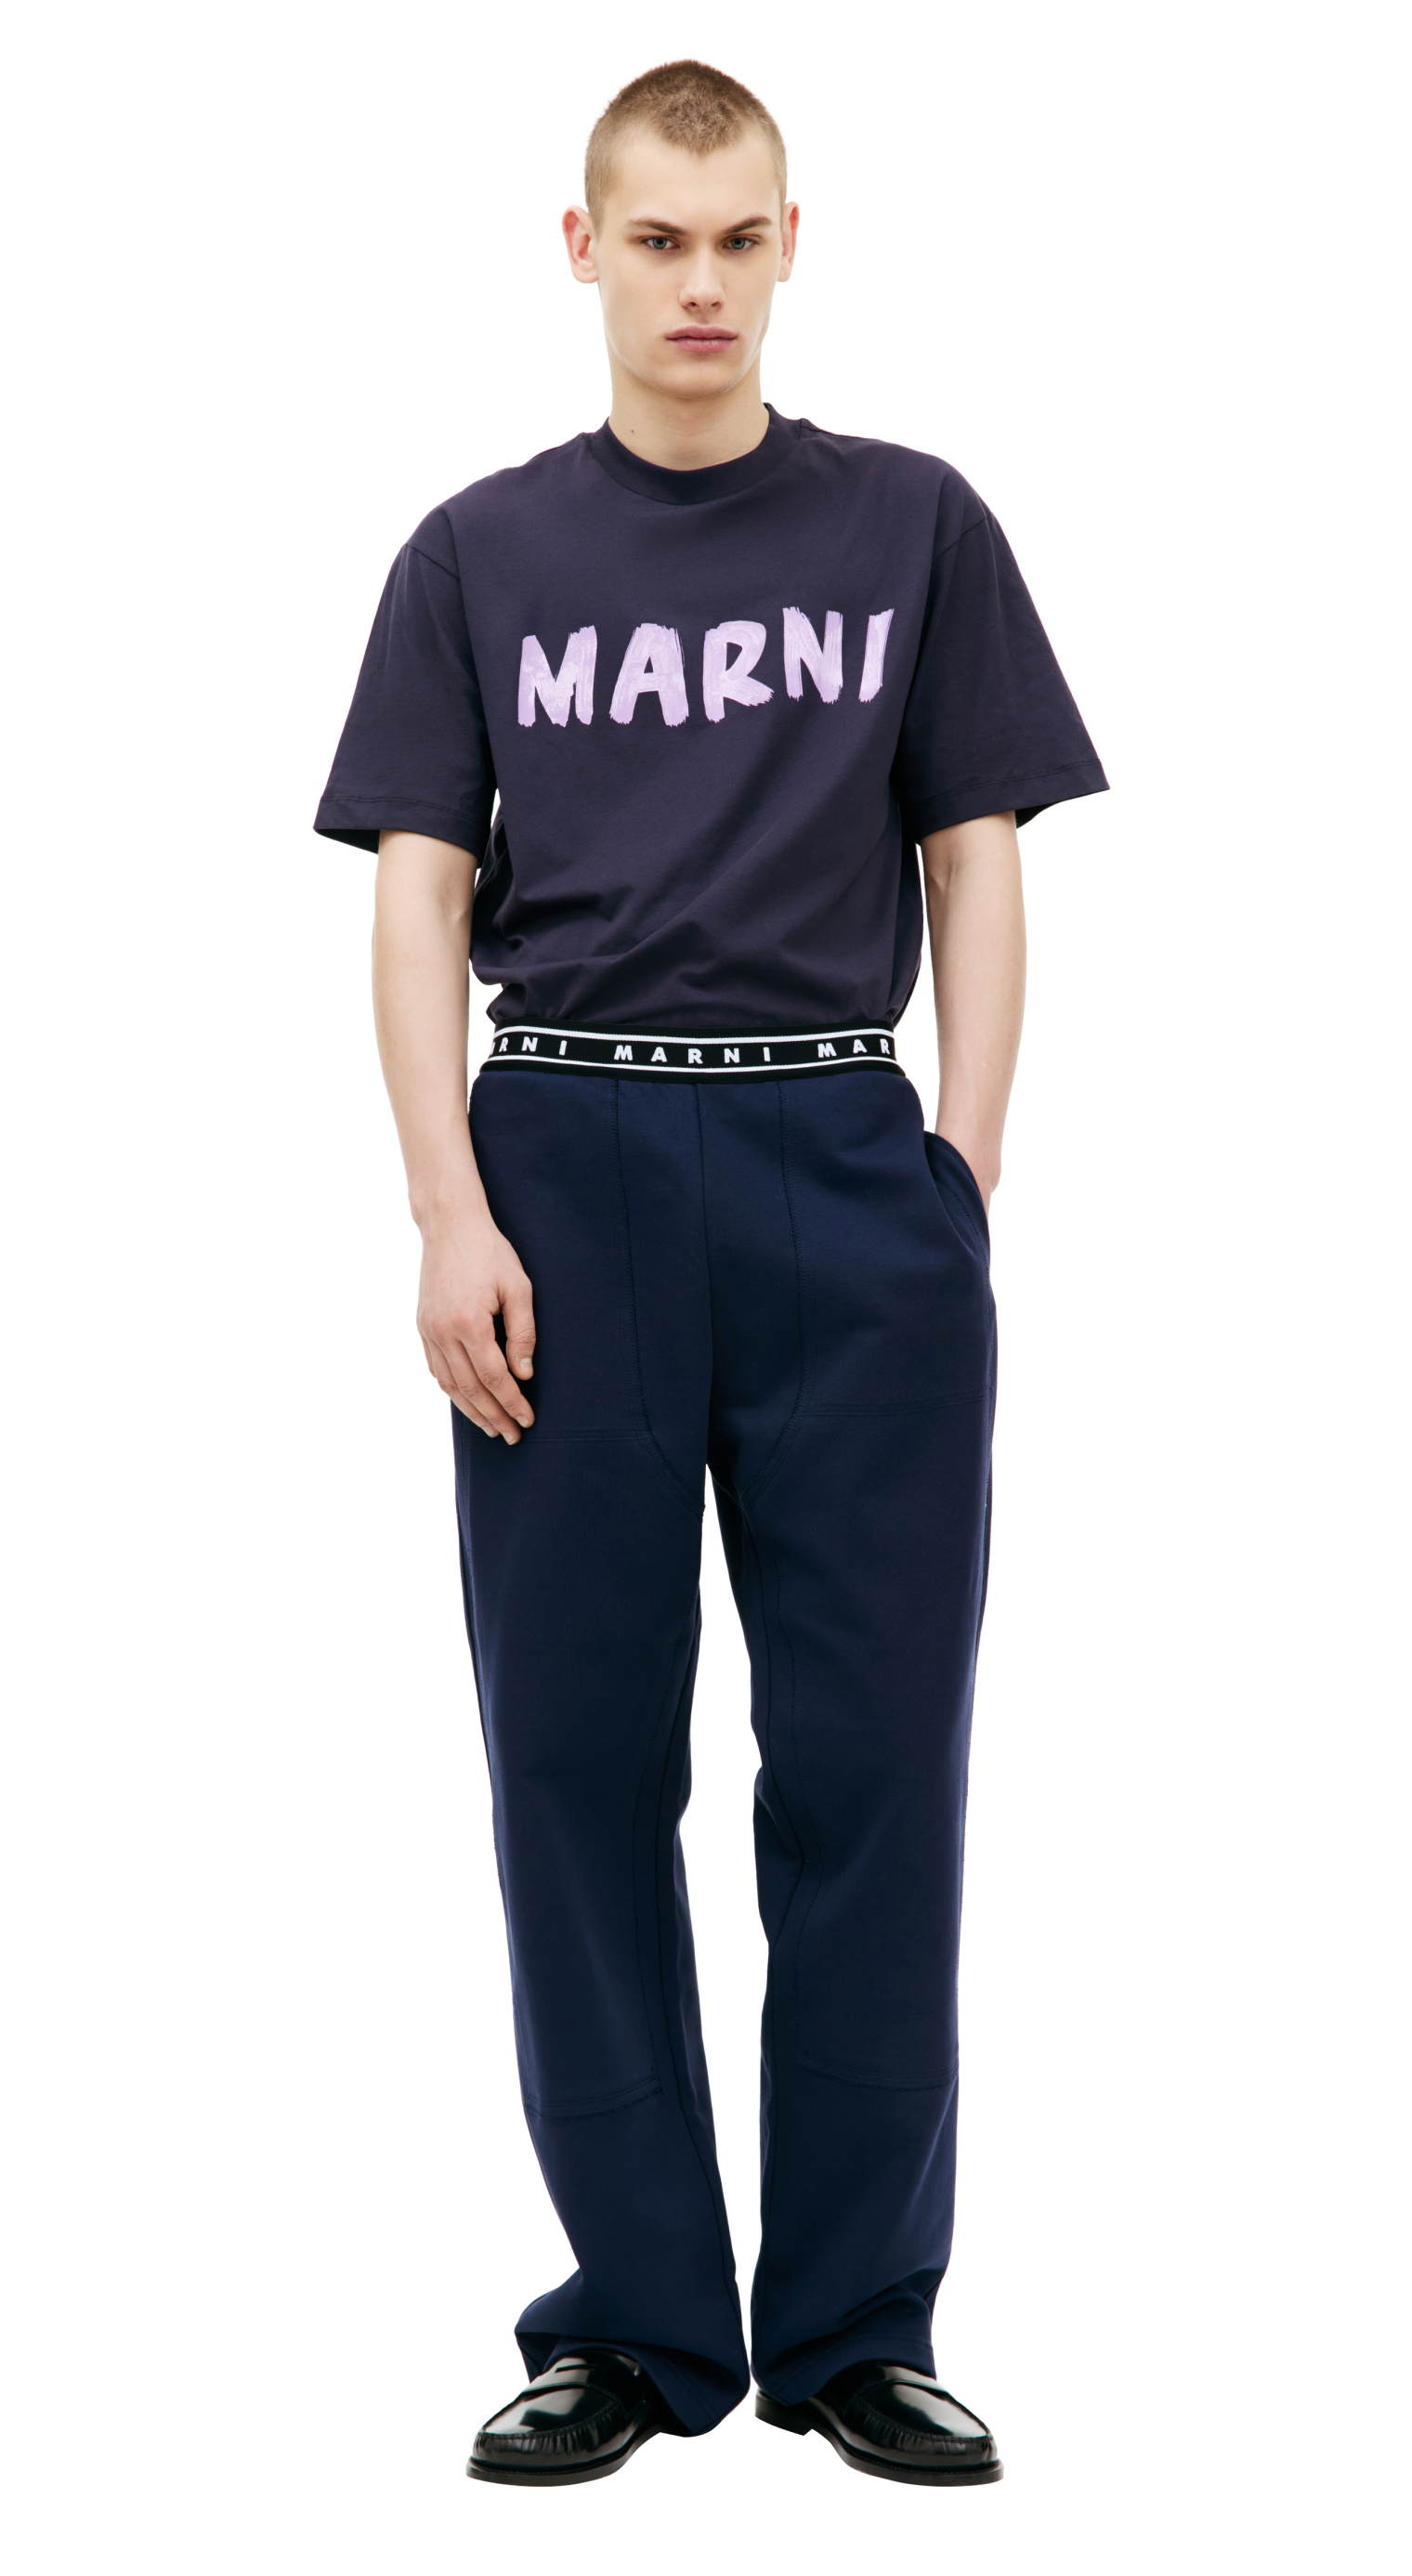 Marni Trousers